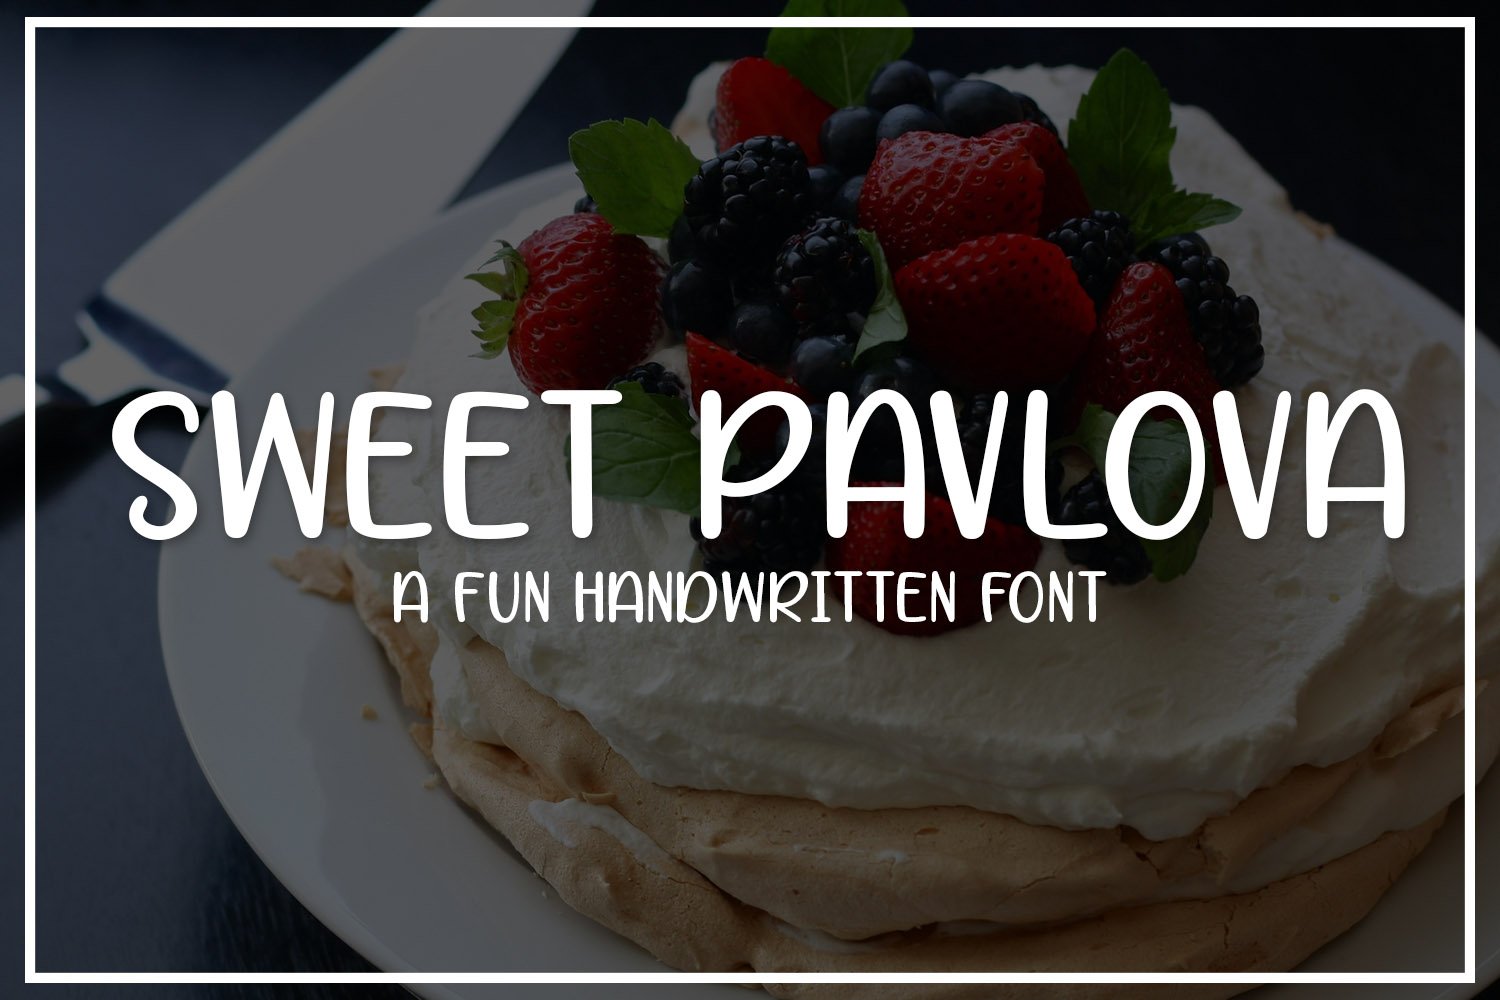 Sweet Pavlova cover image.